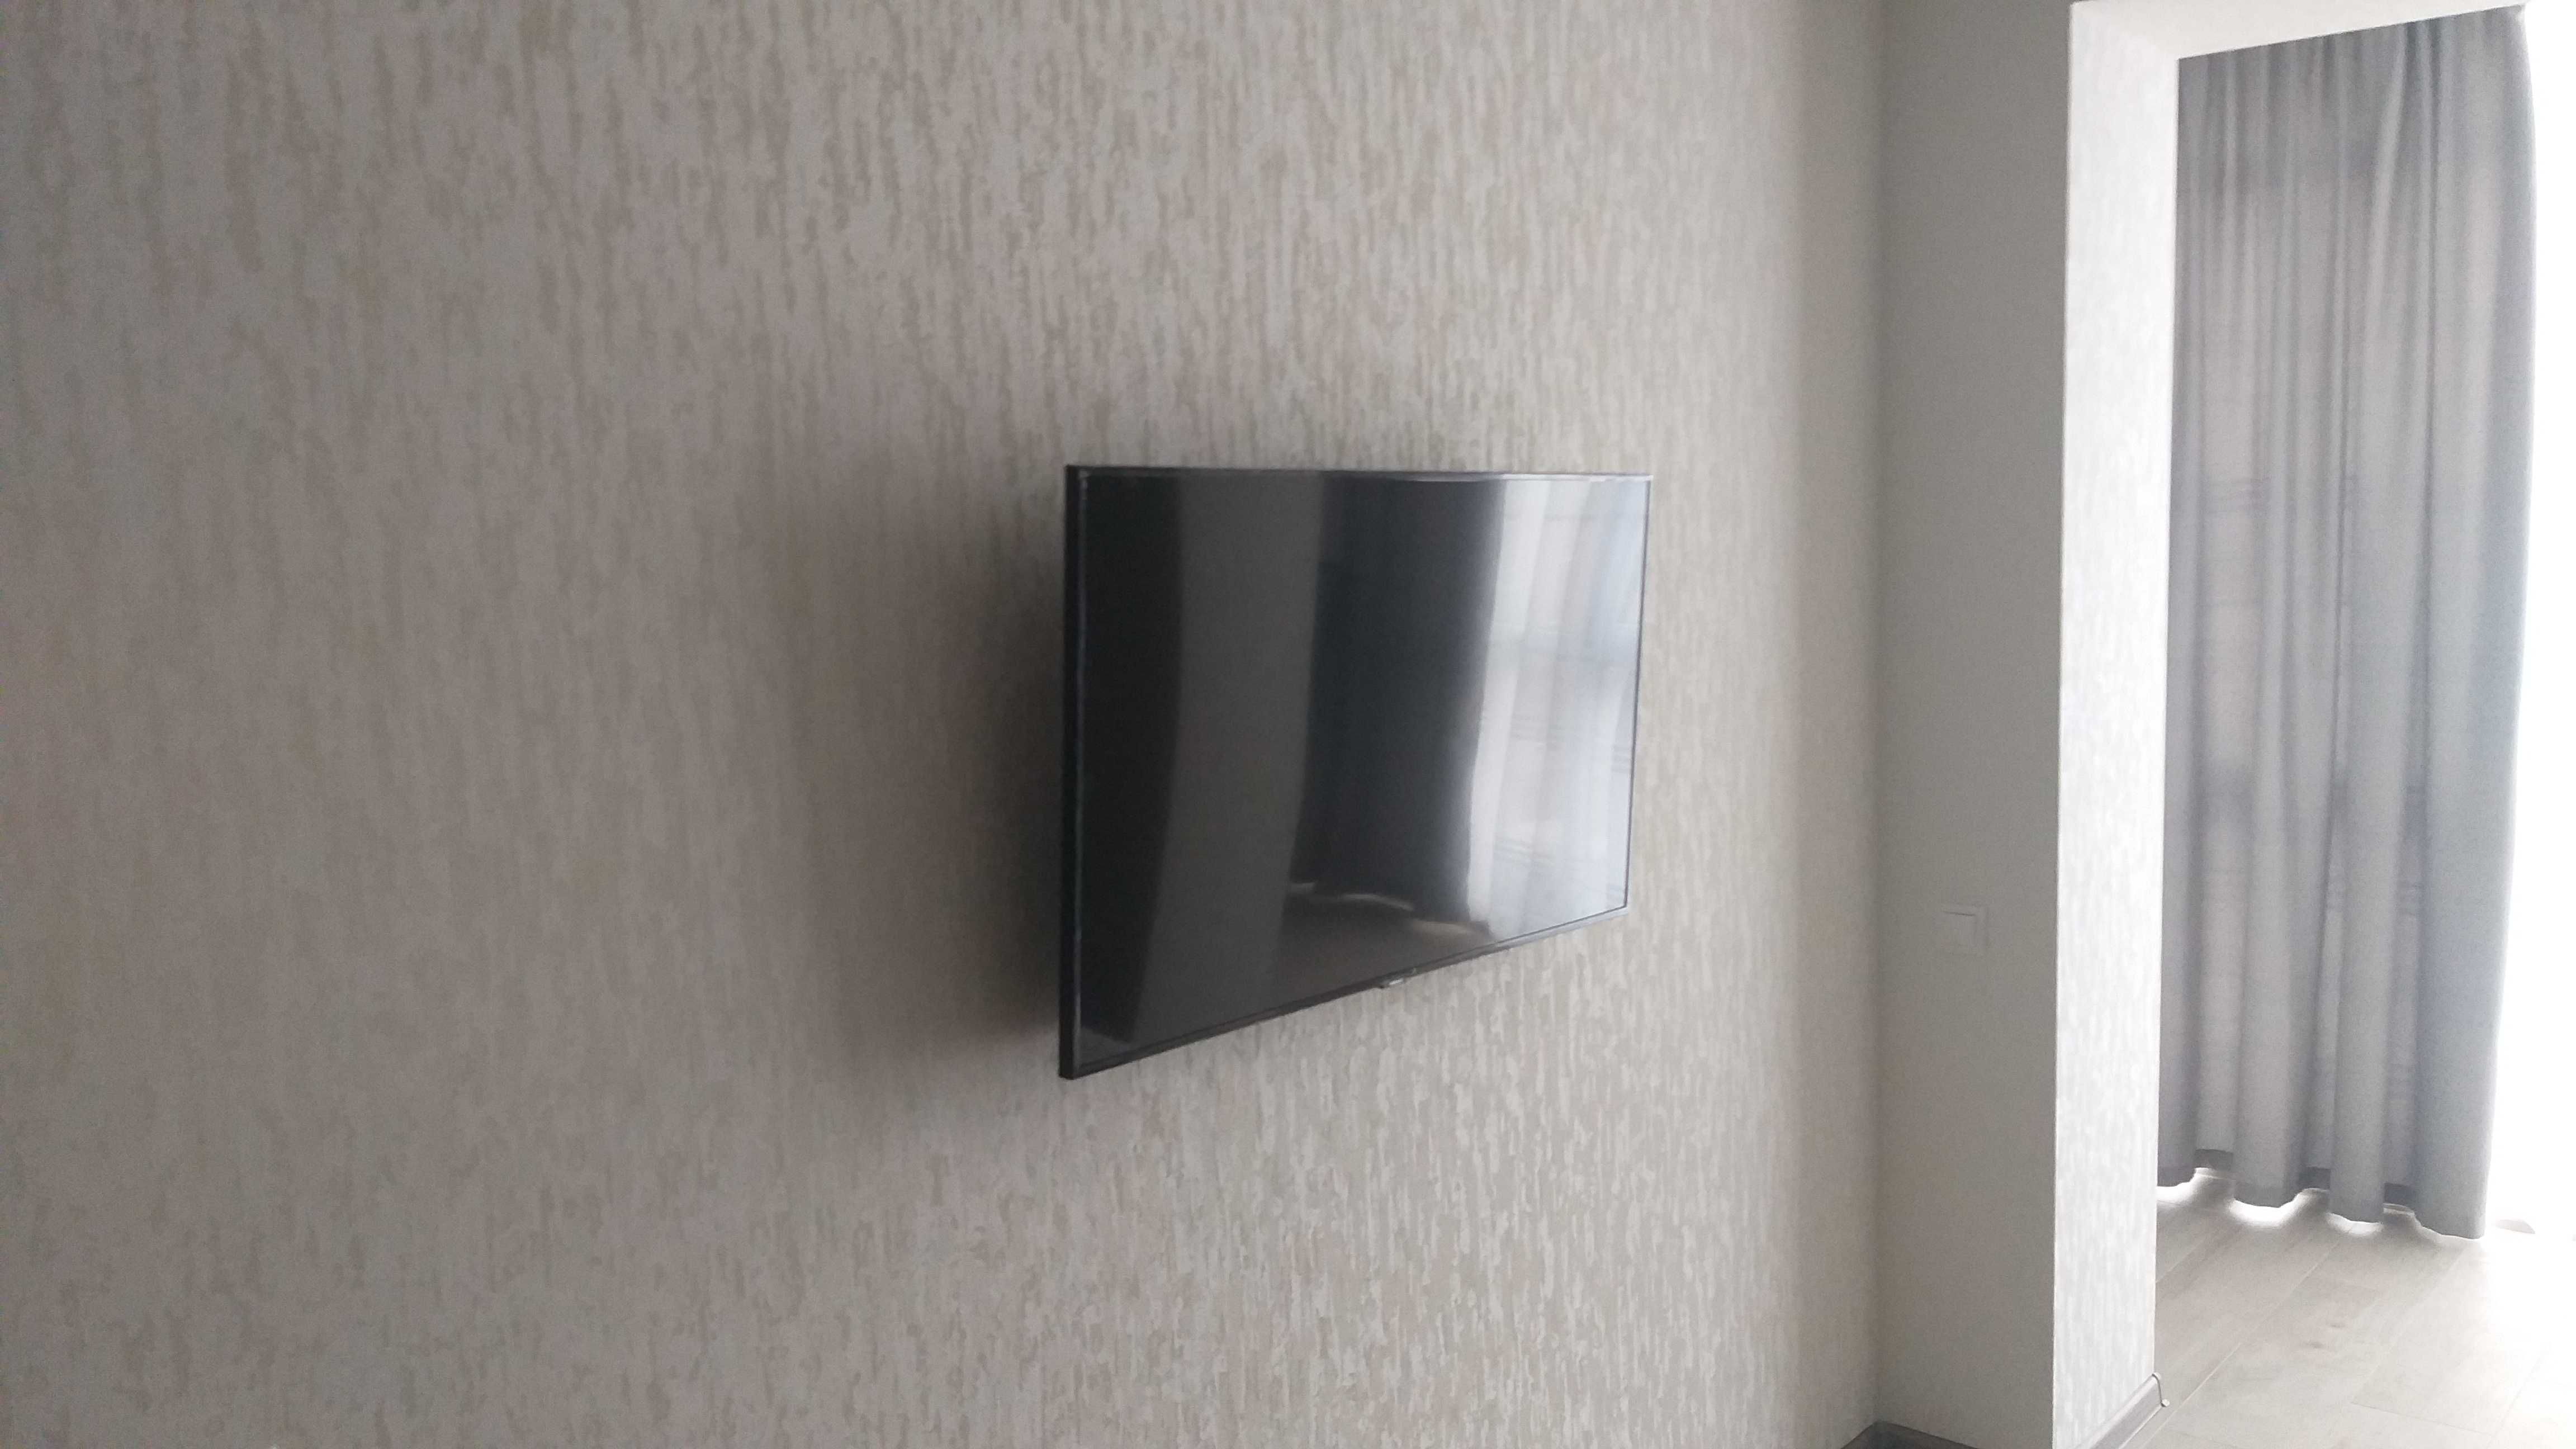 Установка TV кронштейна любой сложности на стену.